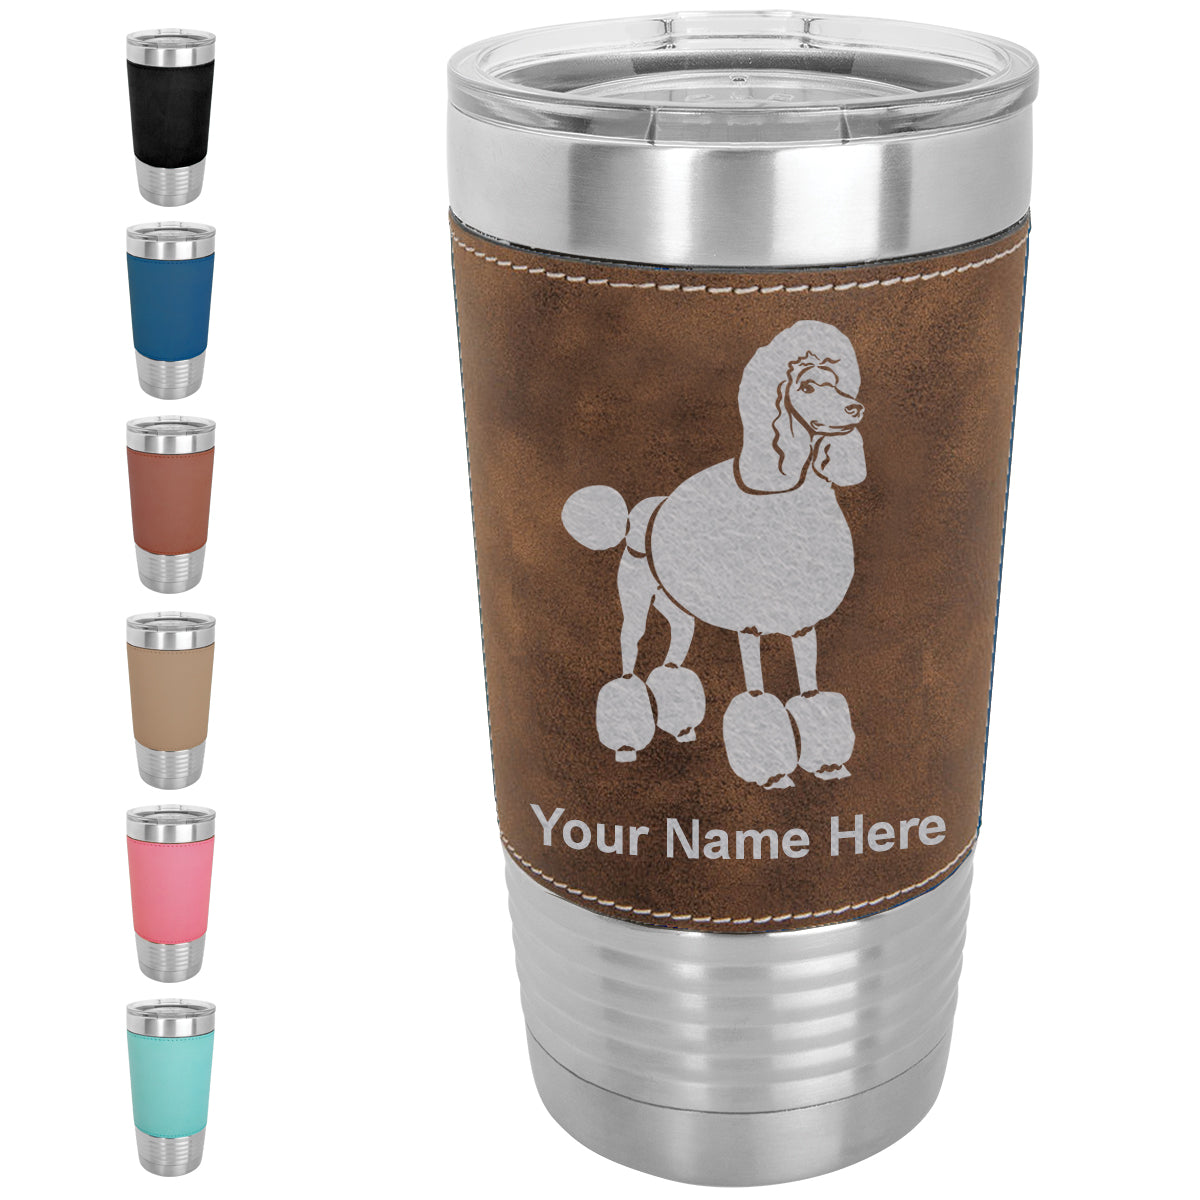 20oz Faux Leather Tumbler Mug, French Poodle Dog, Personalized Engraving Included - LaserGram Custom Engraved Gifts